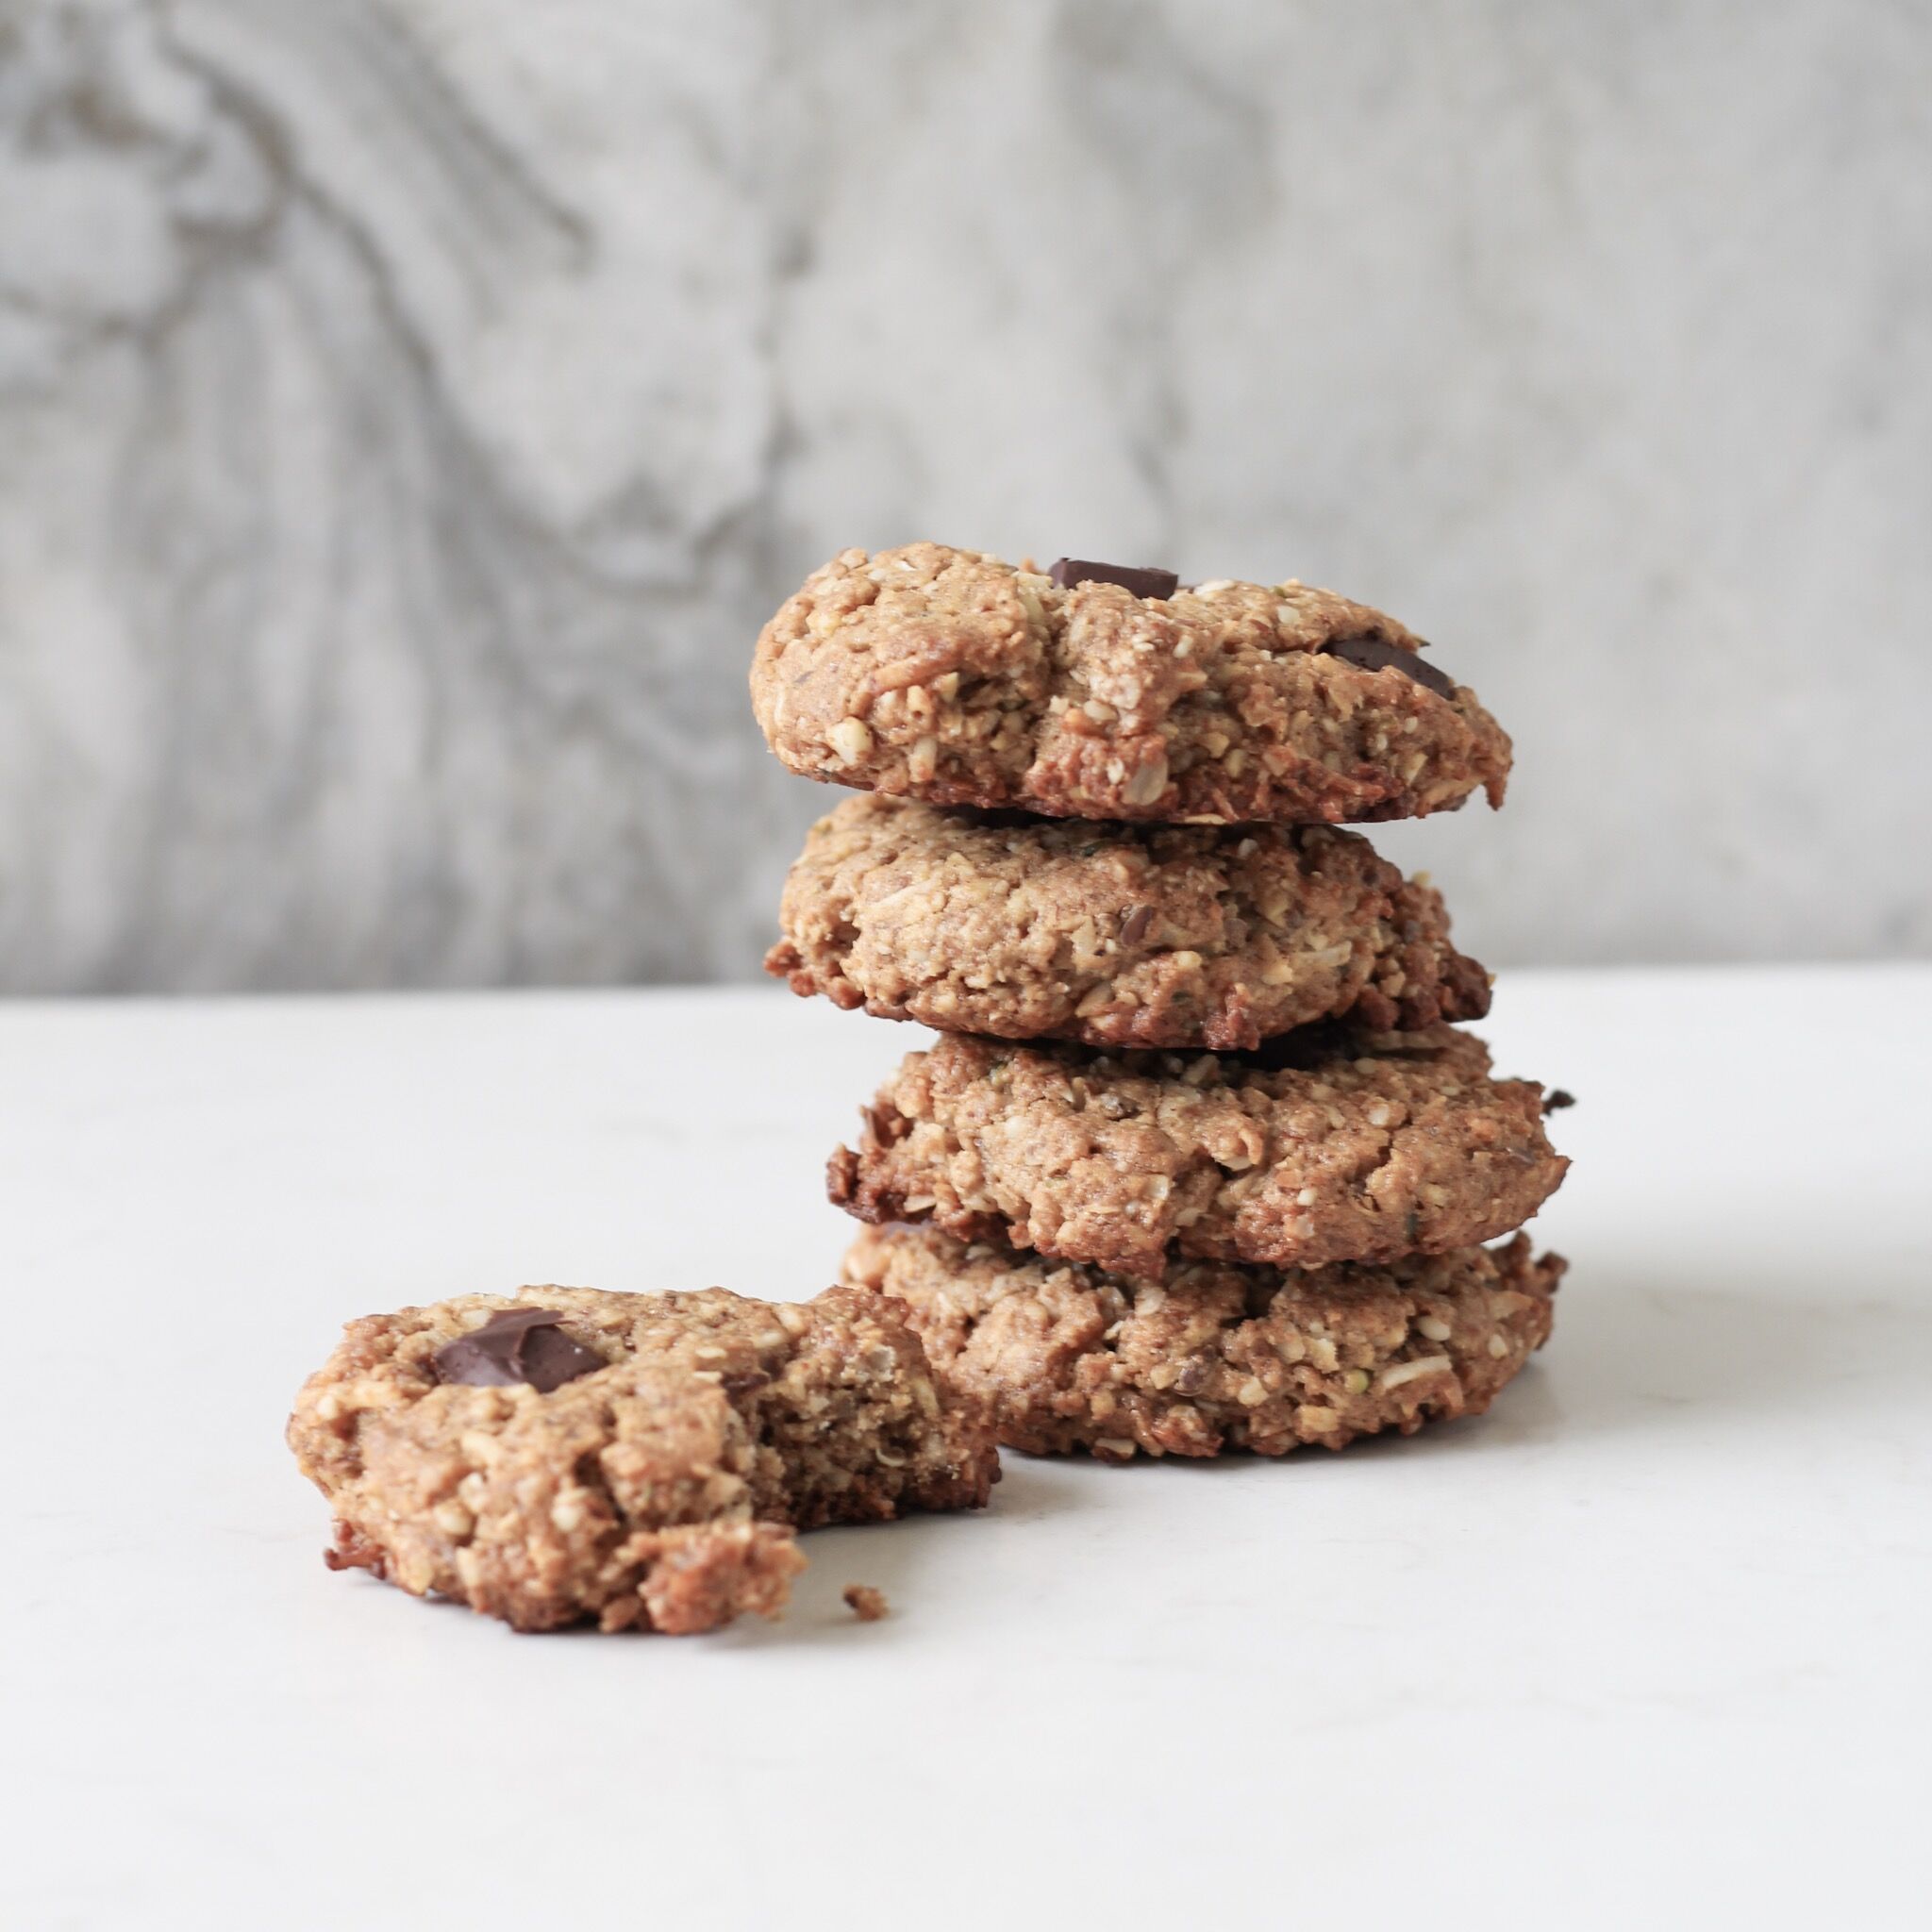 Boobie Cookies ... aka Lactation cookies to help boost breast milk production